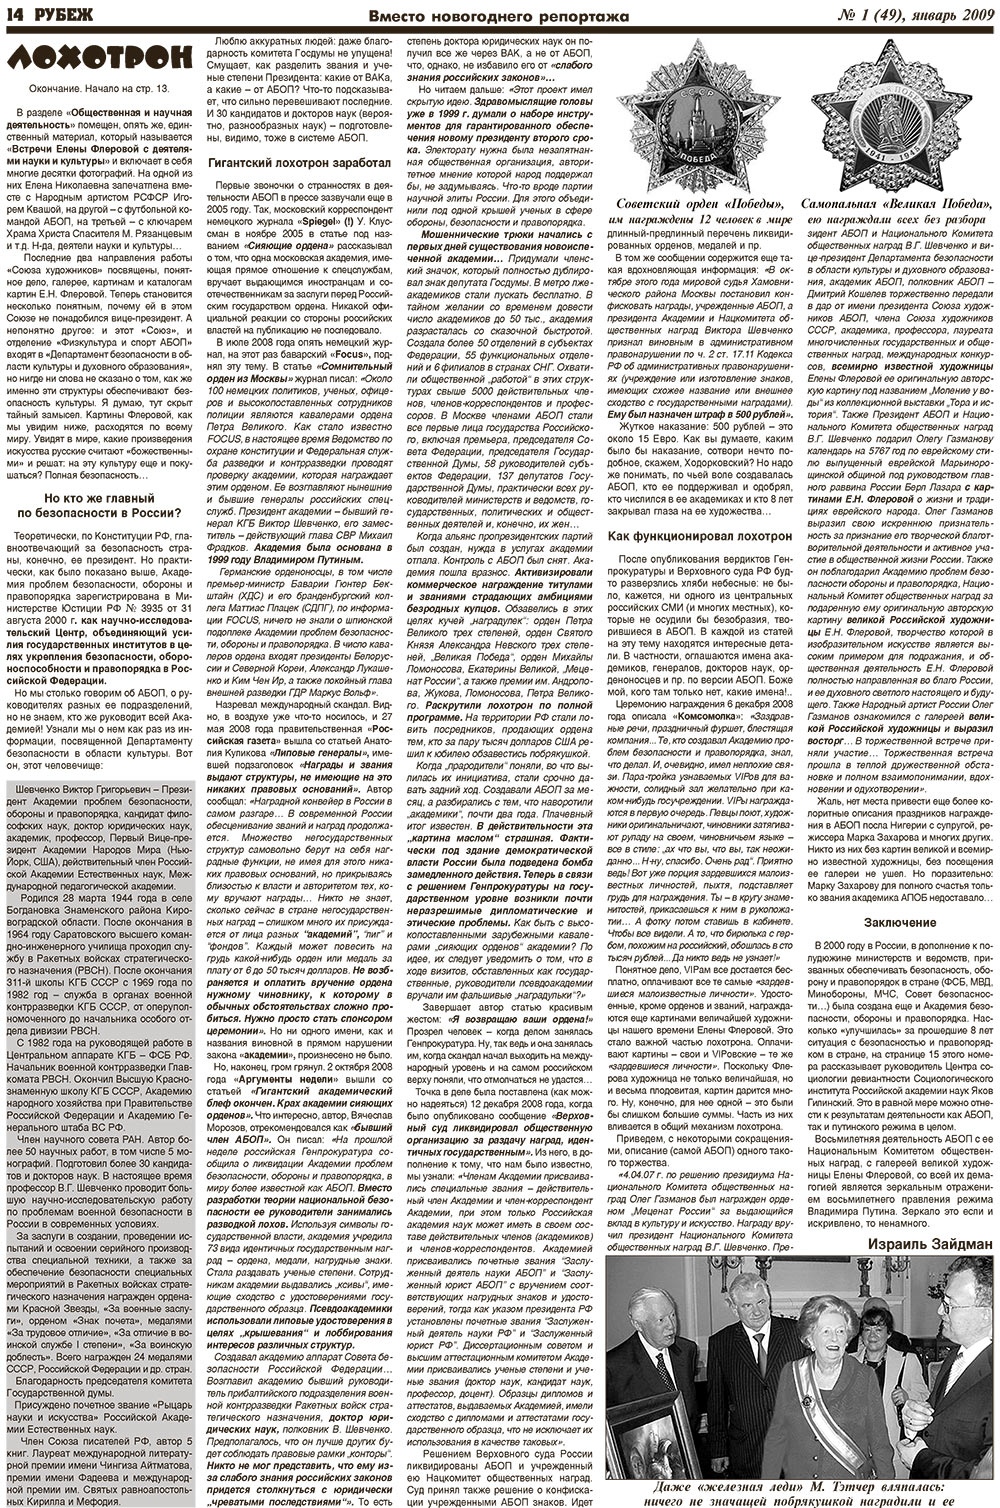 Рубеж, газета. 2009 №1 стр.14